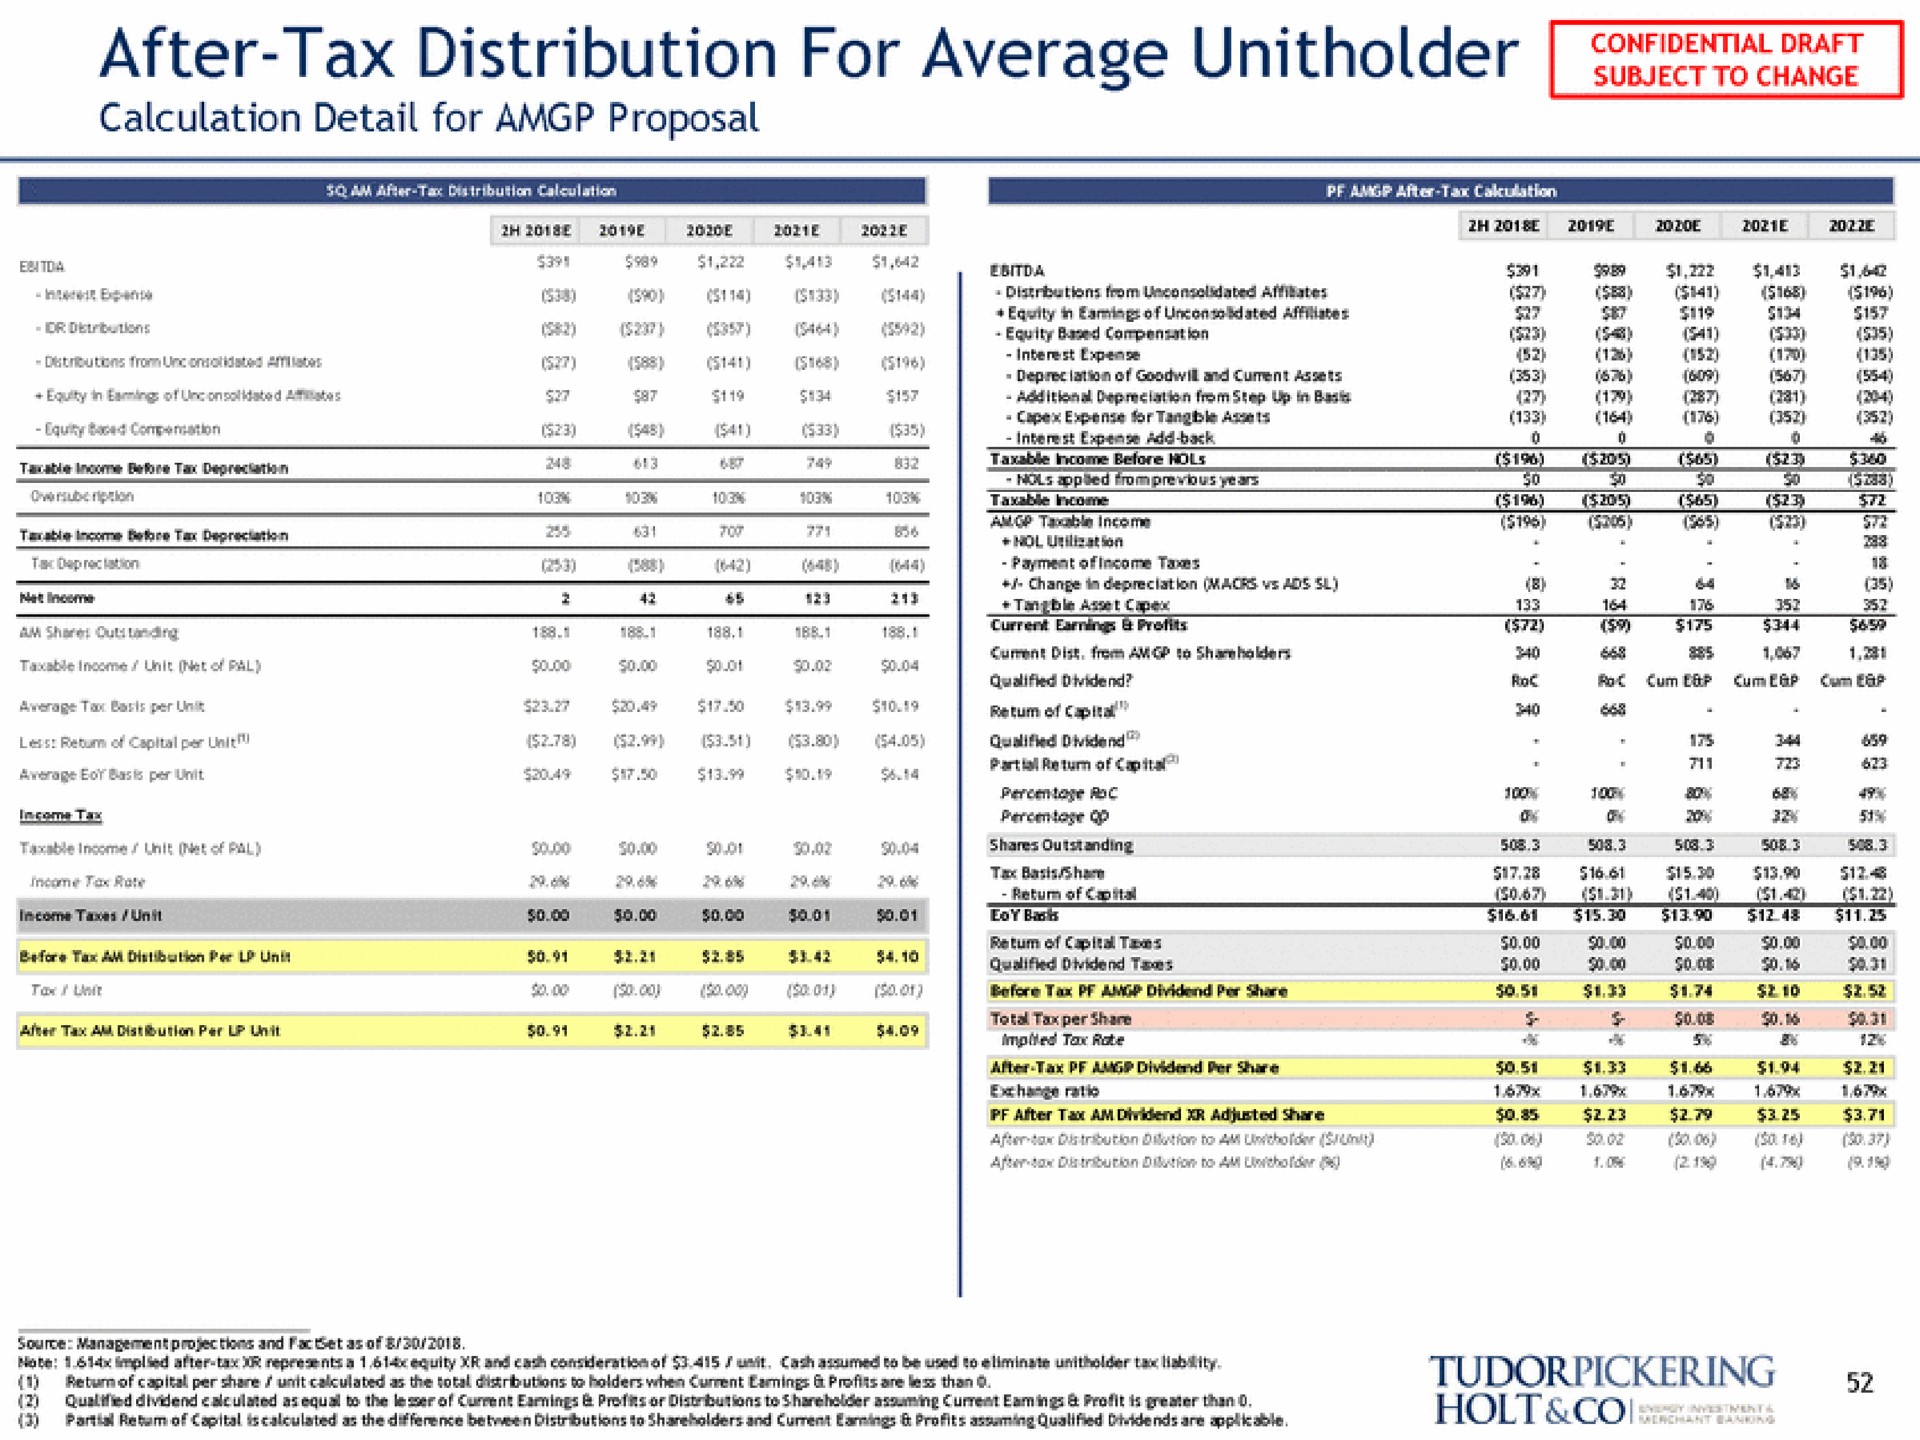 after tax distribution for average | Tudor, Pickering, Holt & Co